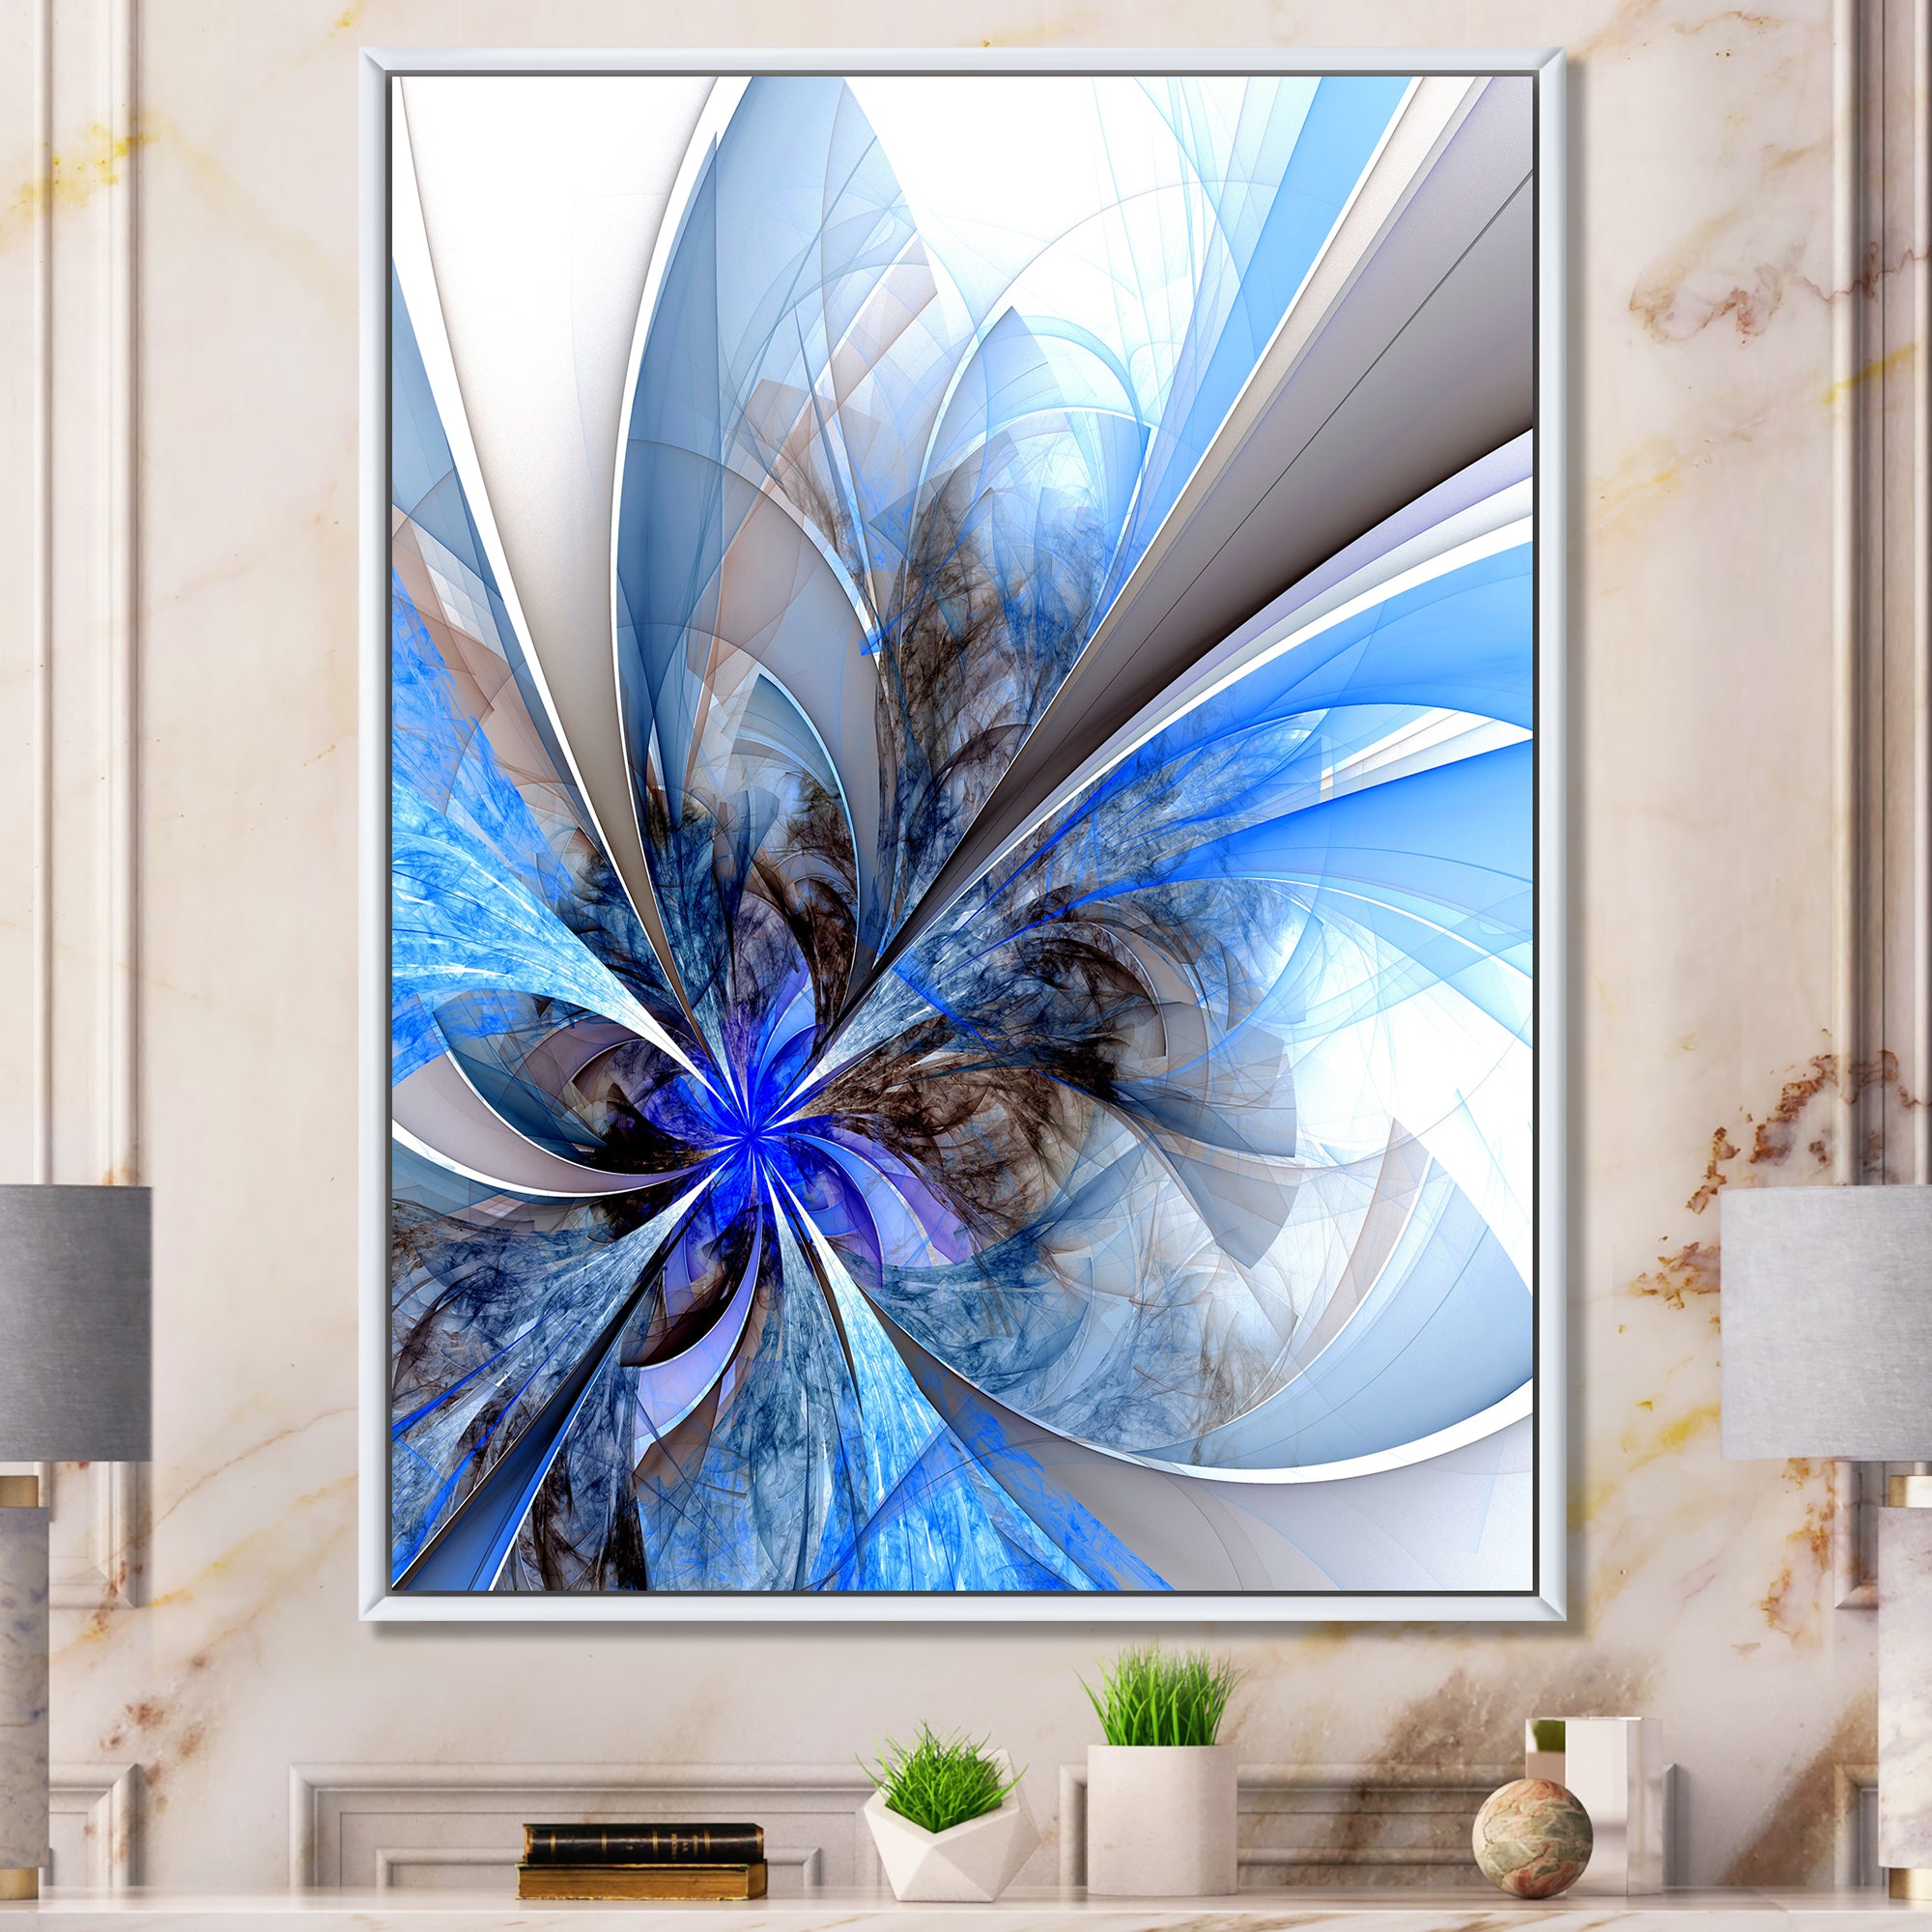 Symmetrical Large Blue Fractal Flower